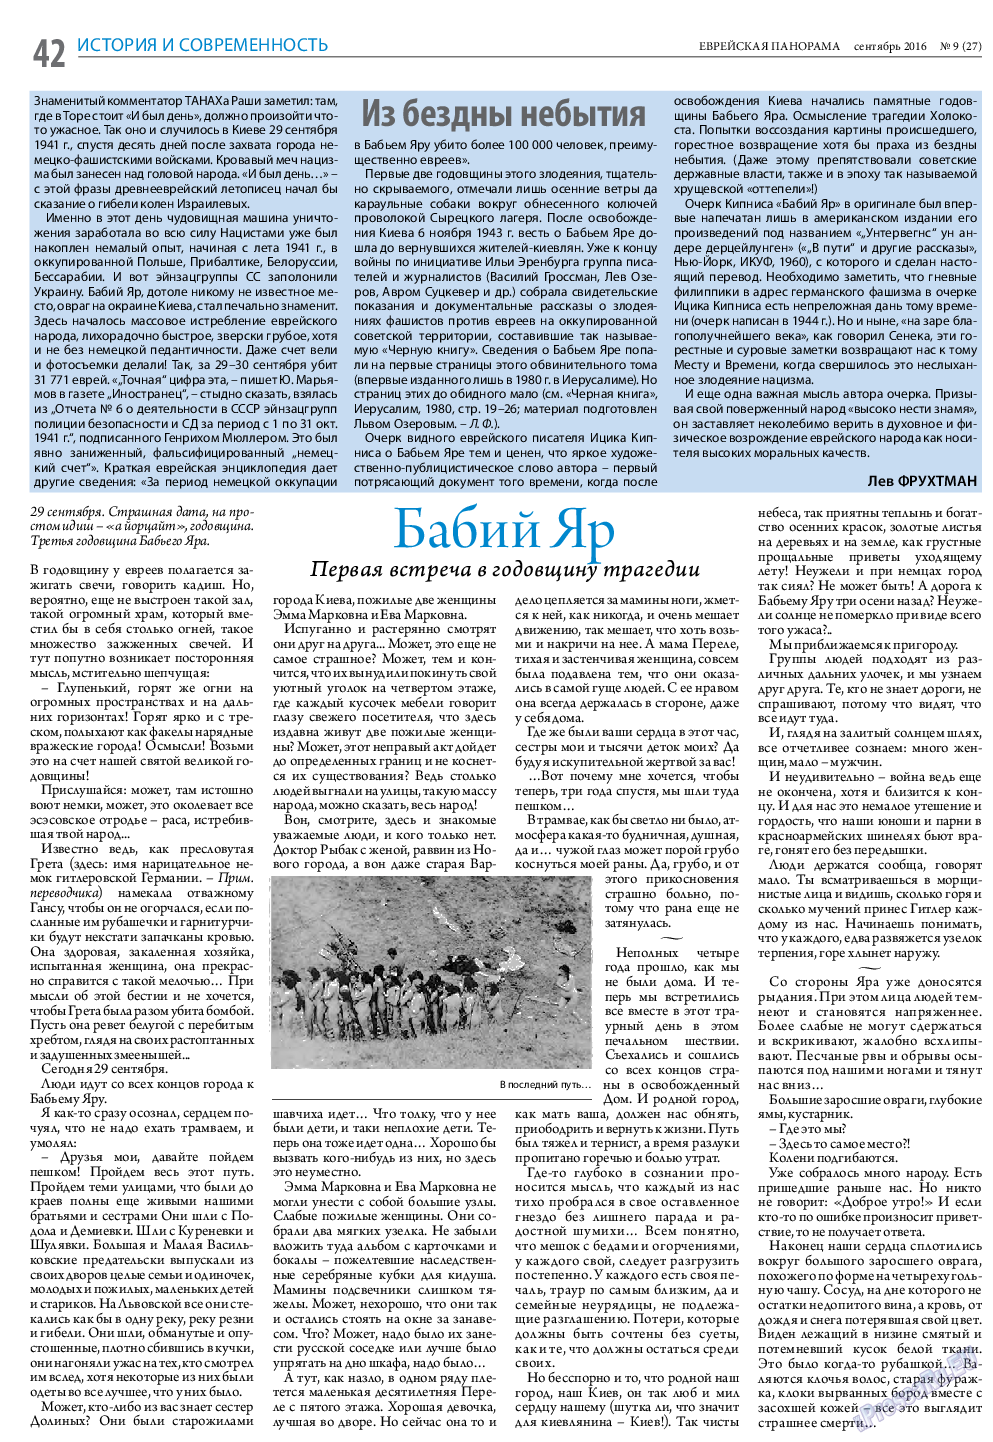 Еврейская панорама, газета. 2016 №9 стр.42